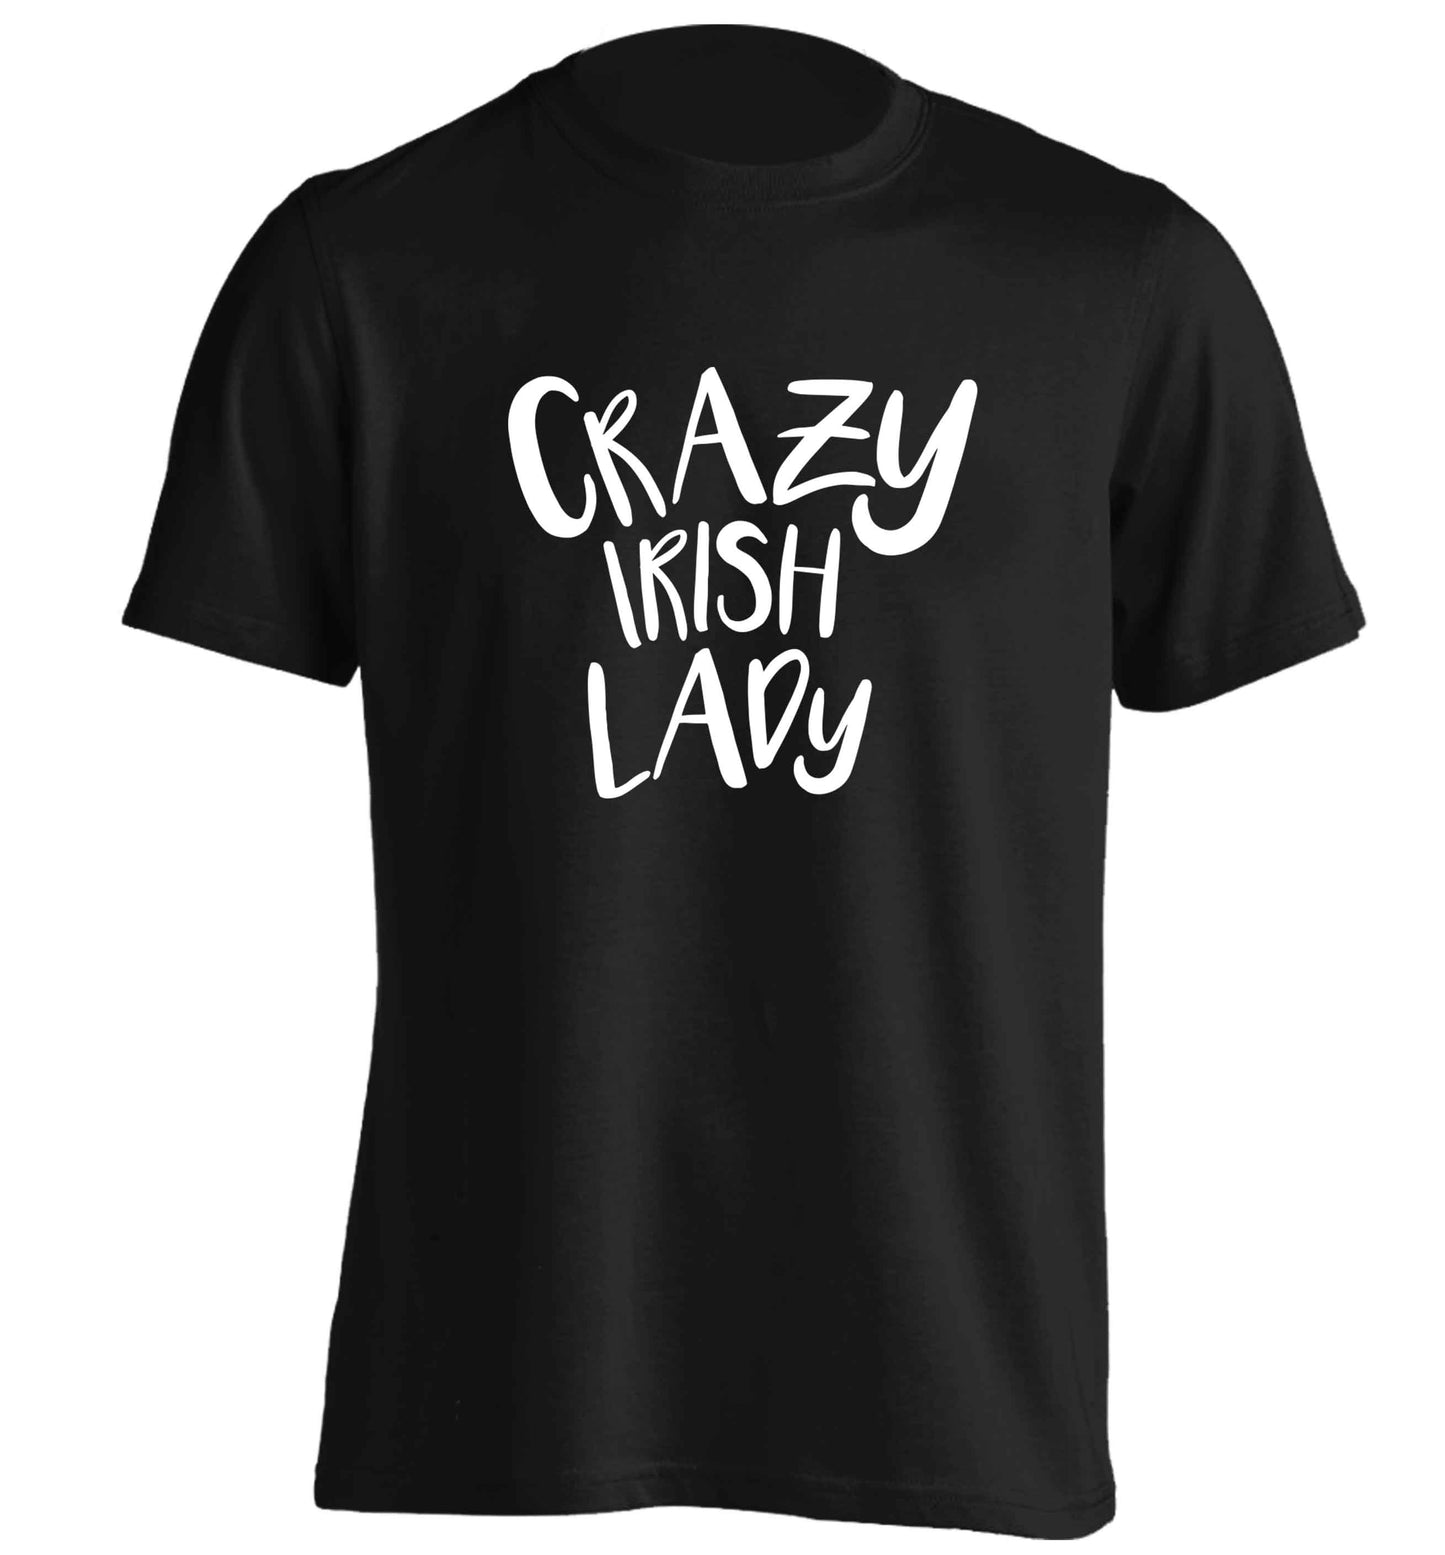 Crazy Irish lady adults unisex black Tshirt 2XL